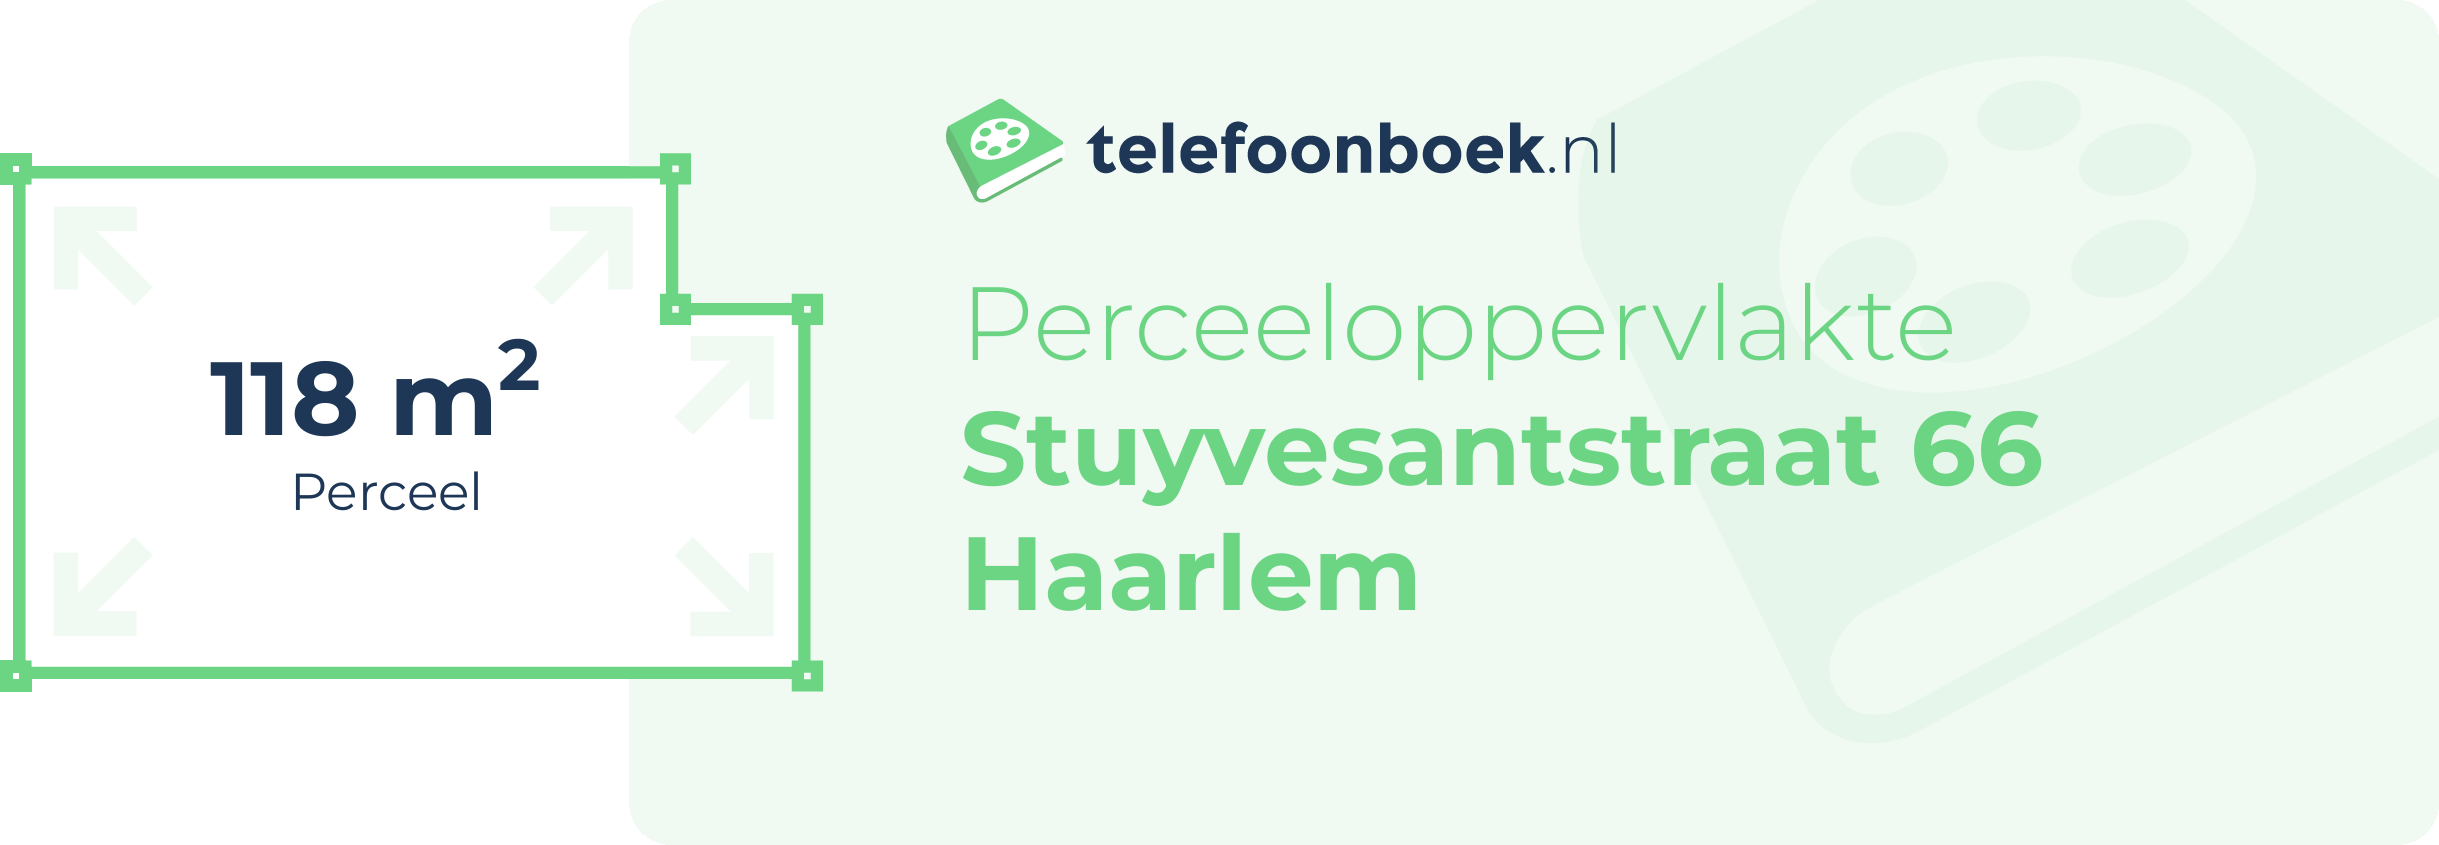 Perceeloppervlakte Stuyvesantstraat 66 Haarlem